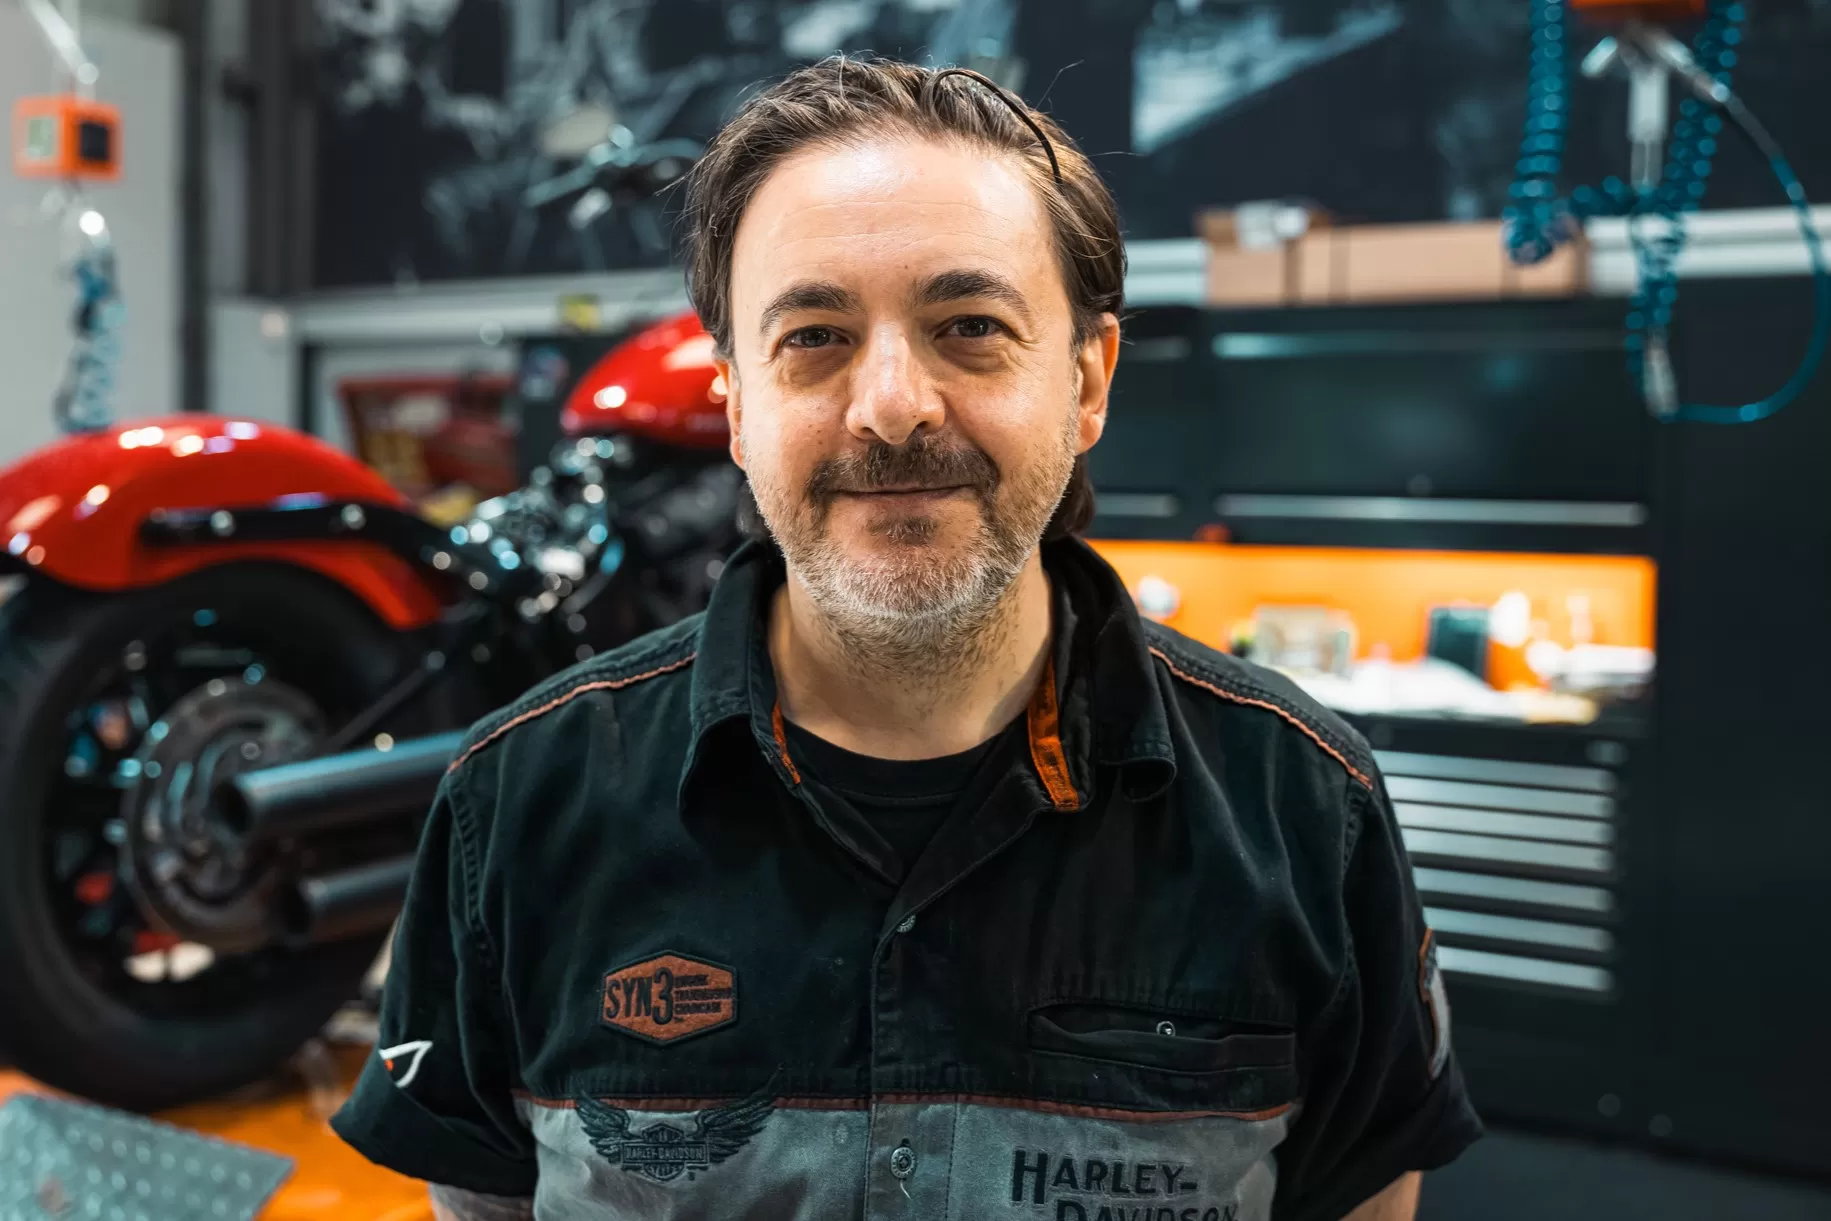 Technical Expert Reading Harley-Davidson